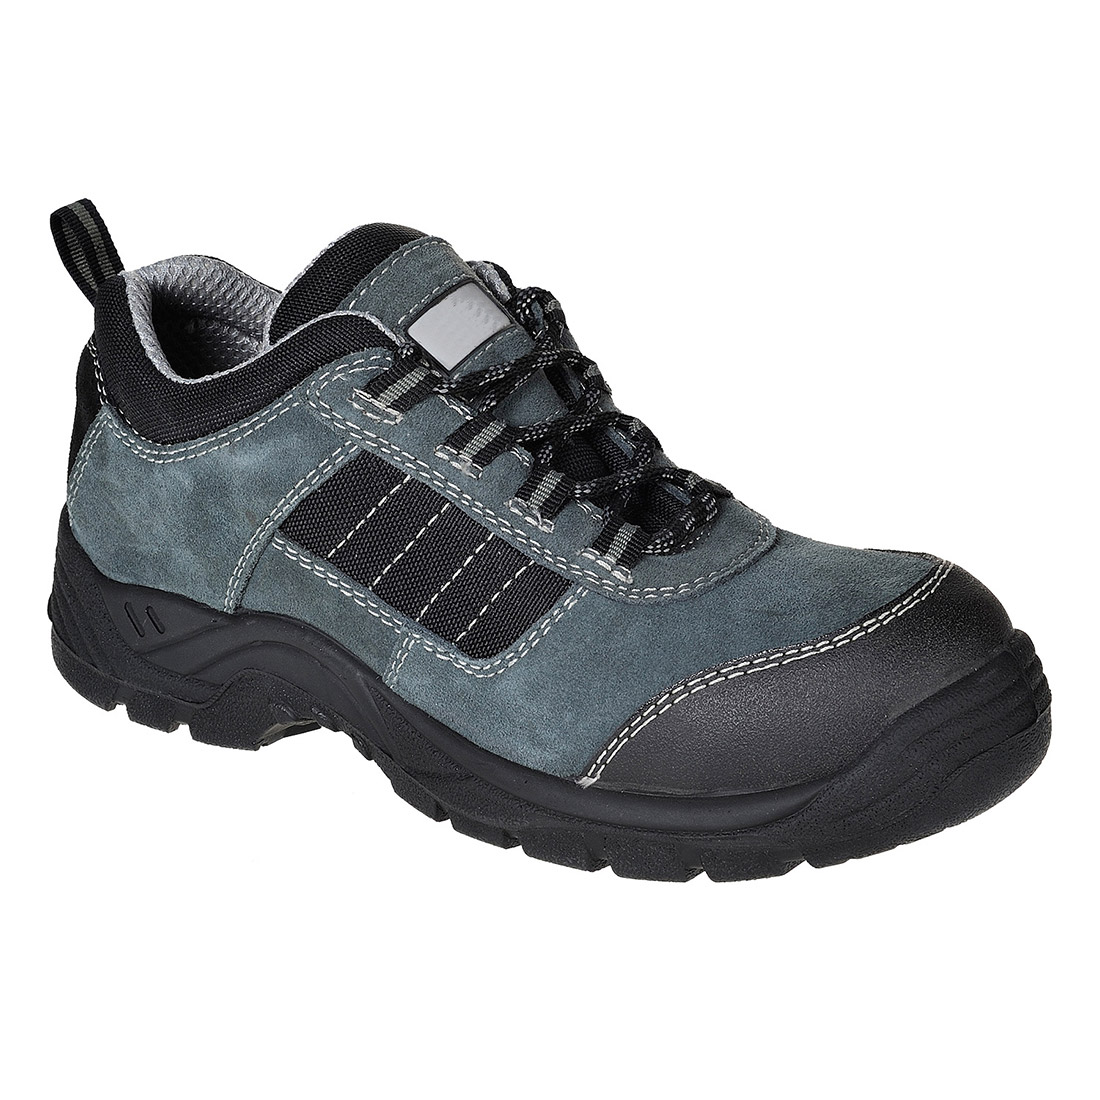 Compositelite Trekker Shoe S1